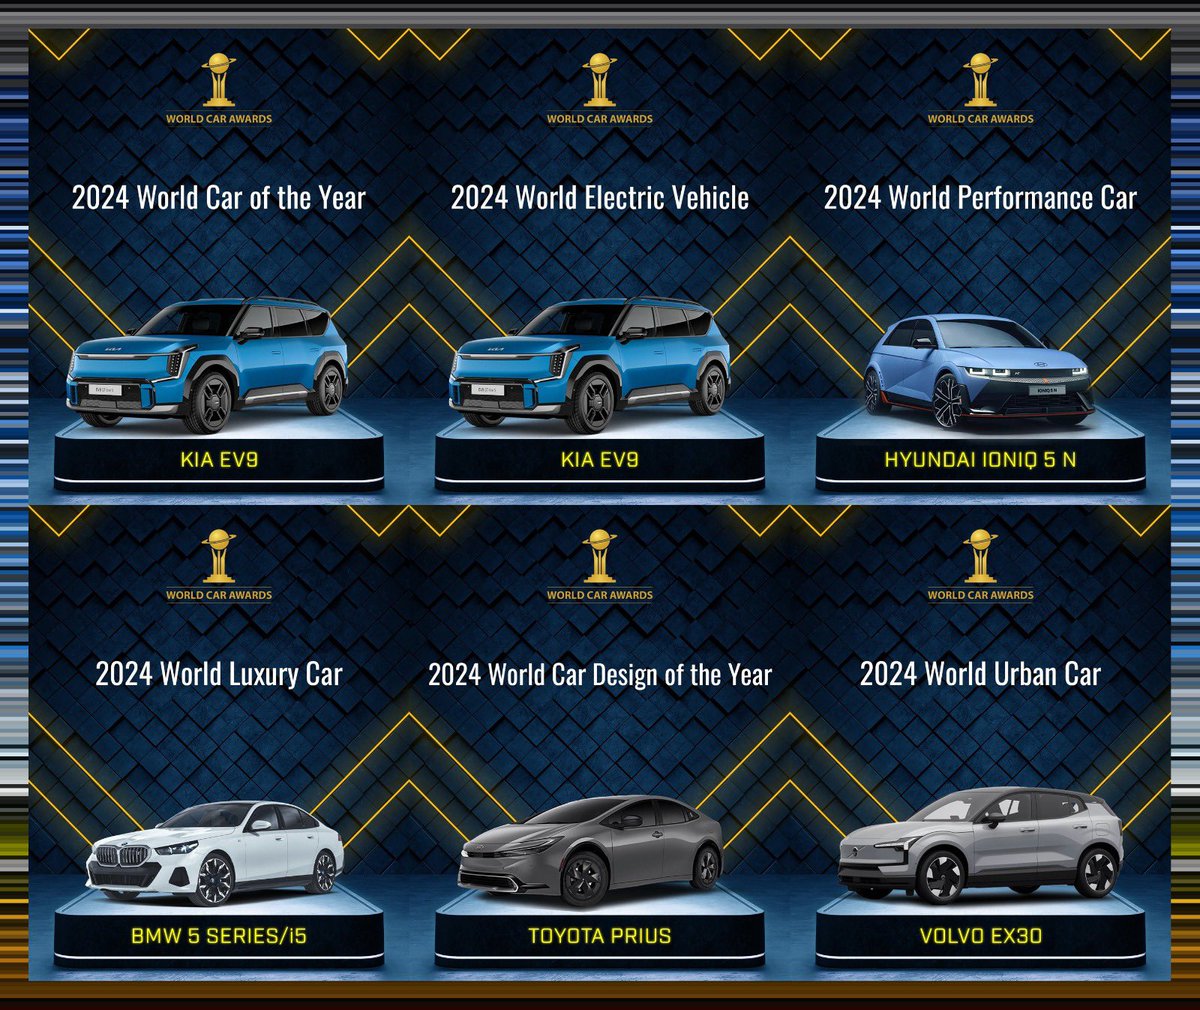 WCA 2024
KIA EV9 DOUBLE WINNER

KIA EV9 – 2024 WORLD CAR OF THE YEAR

BMW 5 SERIES / i5 – 2024 WORLD LUXURY CAR

IONIQ 5 N – 2024 WORLD PERFORMANCE CAR

KIA EV9 – 2024 WORLD ELECTRIC VEHICLE

VOLVO EX30 – 2024 WORLD URBAN CAR

TOYOTA PRIUS – 2023 WORLD CAR DESIGN OF THE YEAR